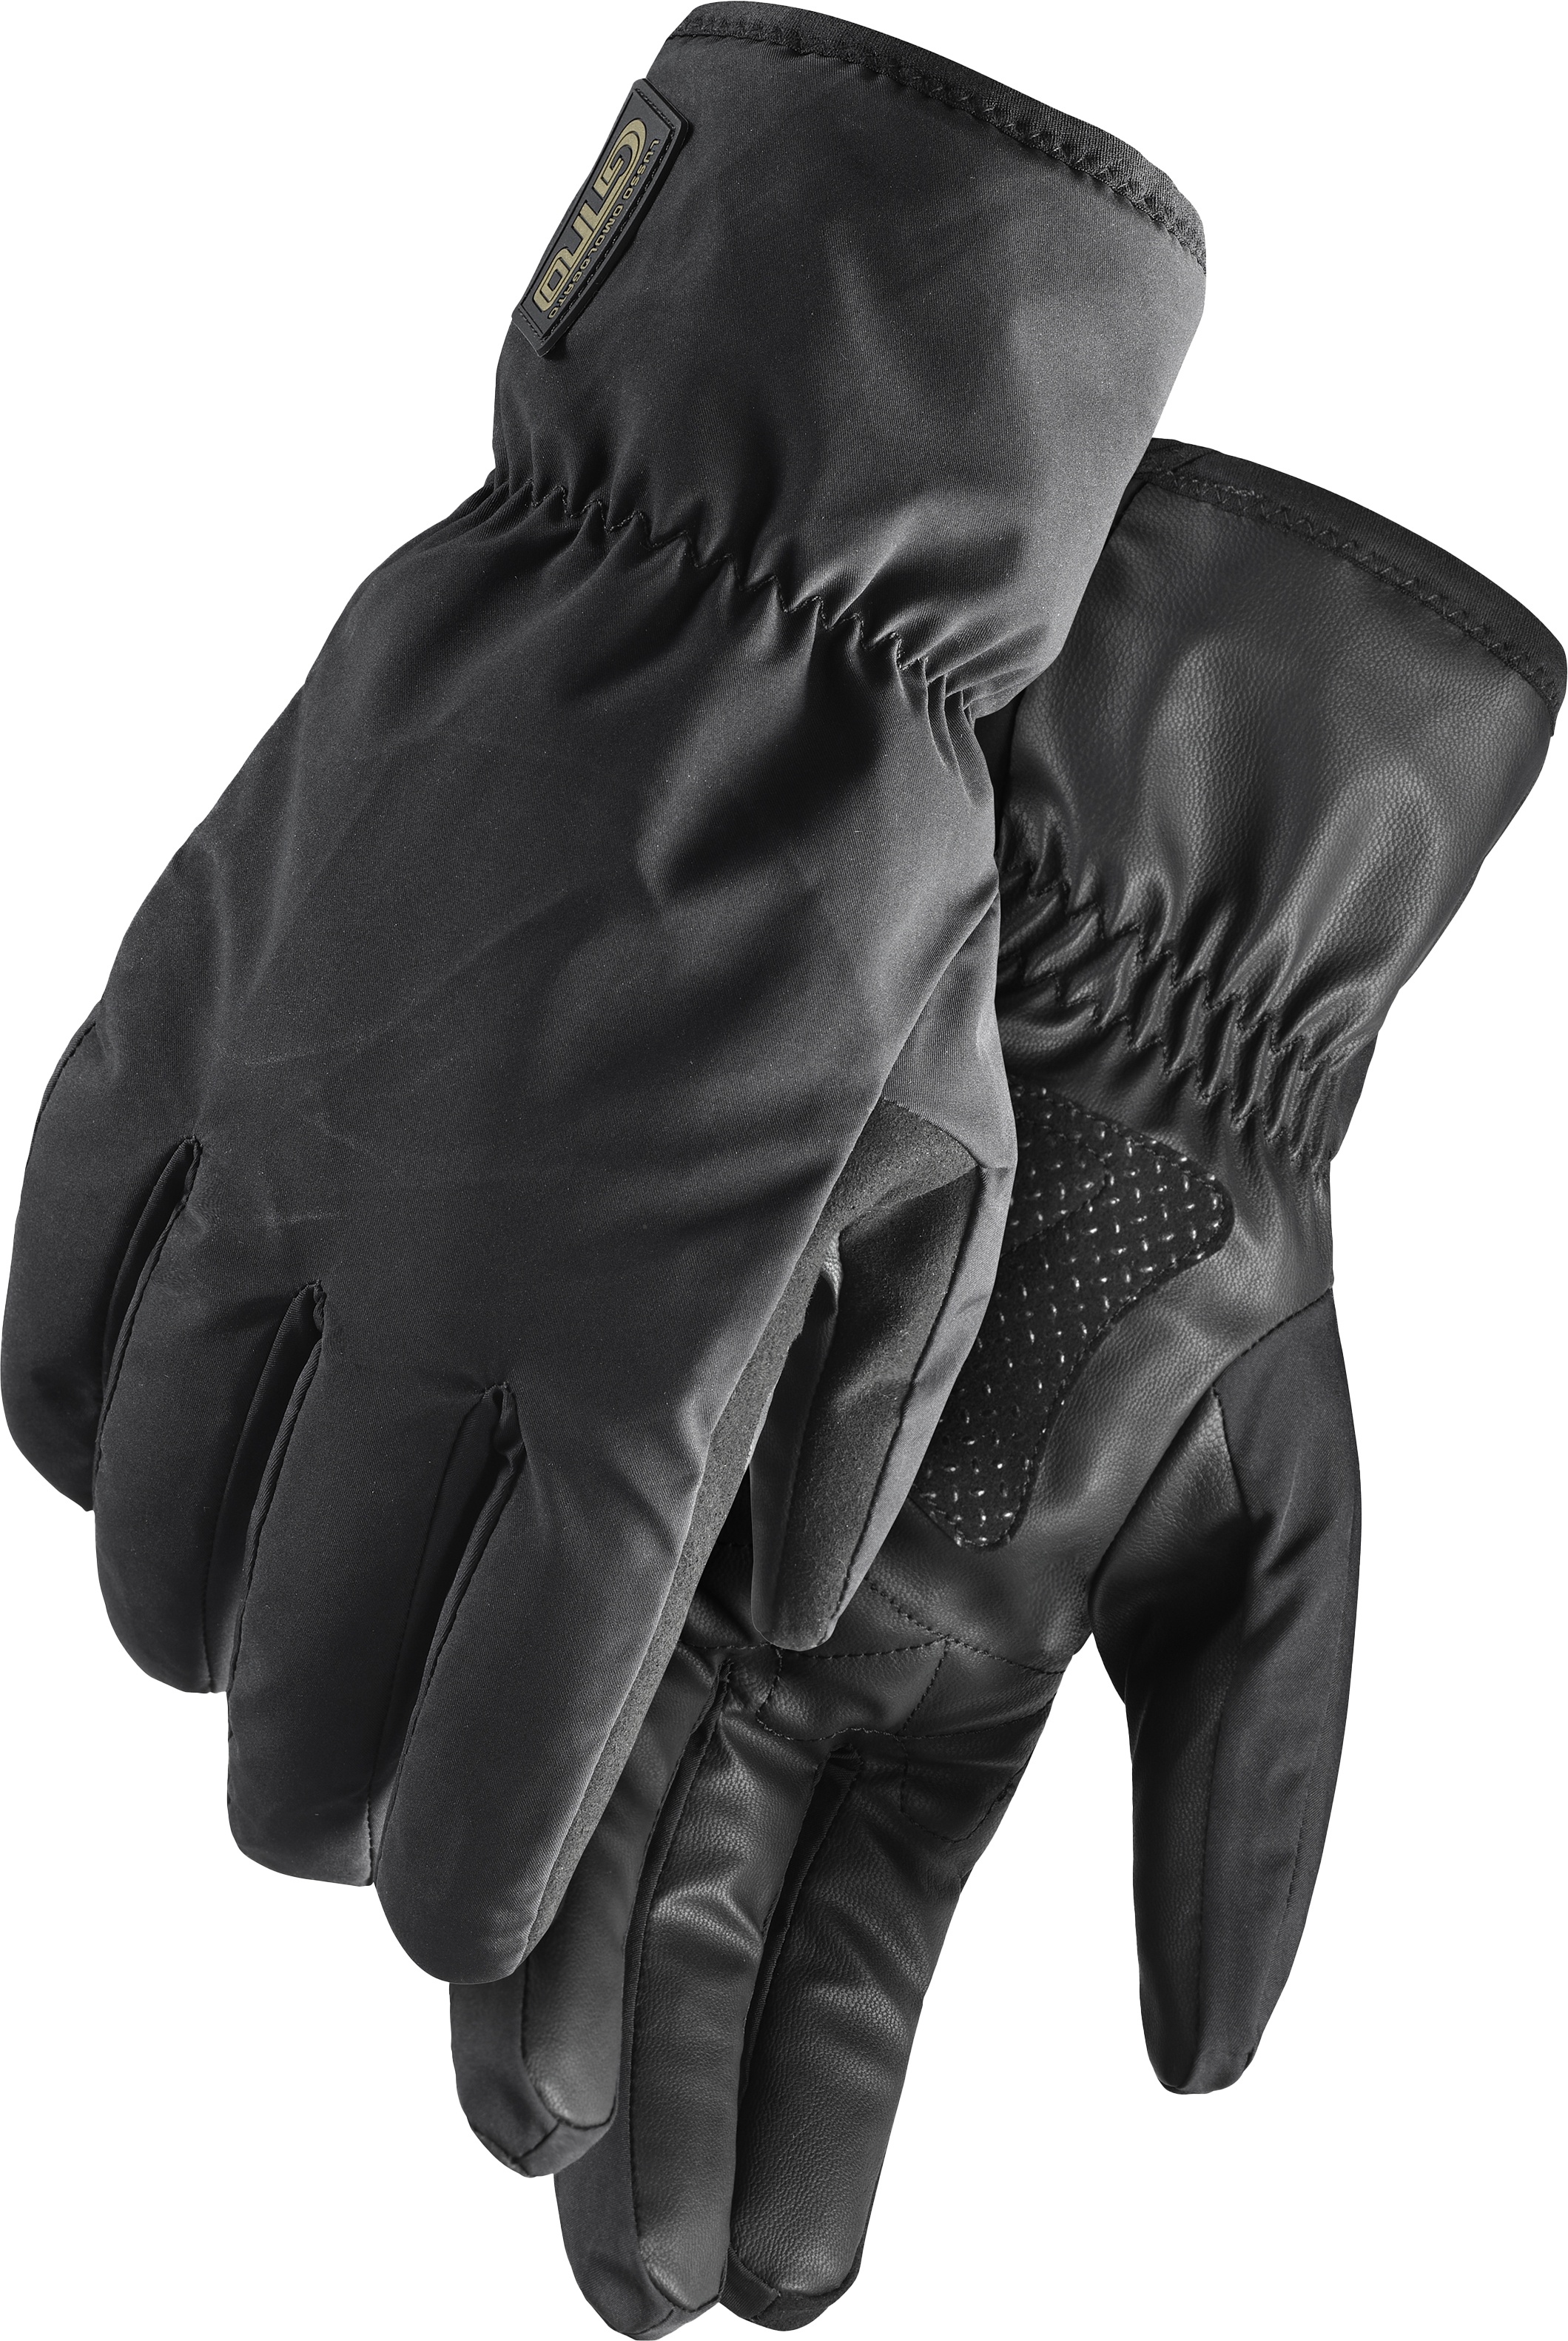 Beklædning - Cykelhandsker - Assos GTO Ultraz Winter Thermo Rain Gloves - Sort